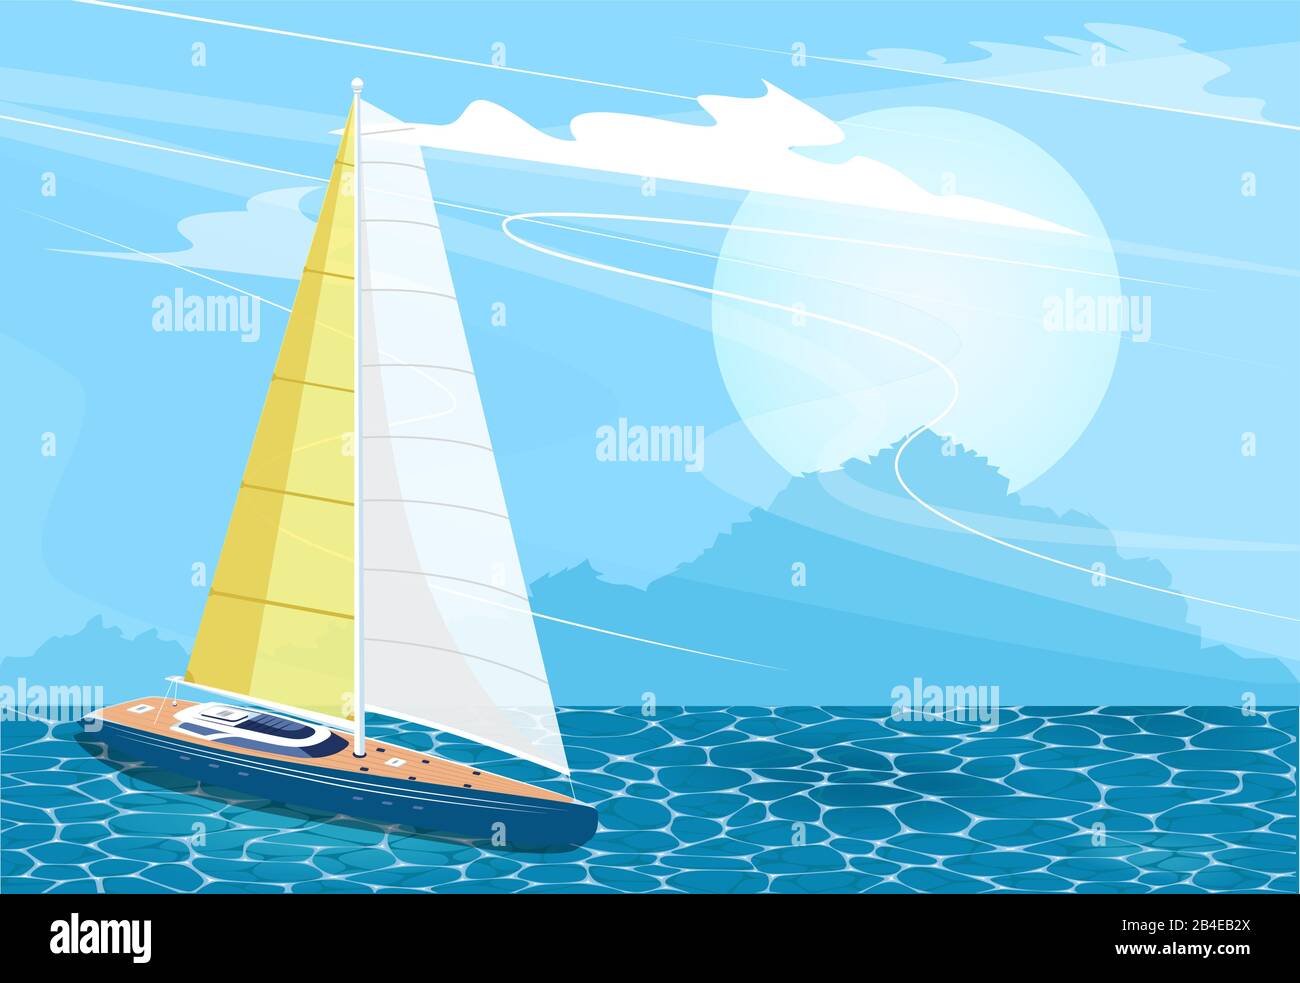 Sailing ship banner in cartoon style Stock Vector